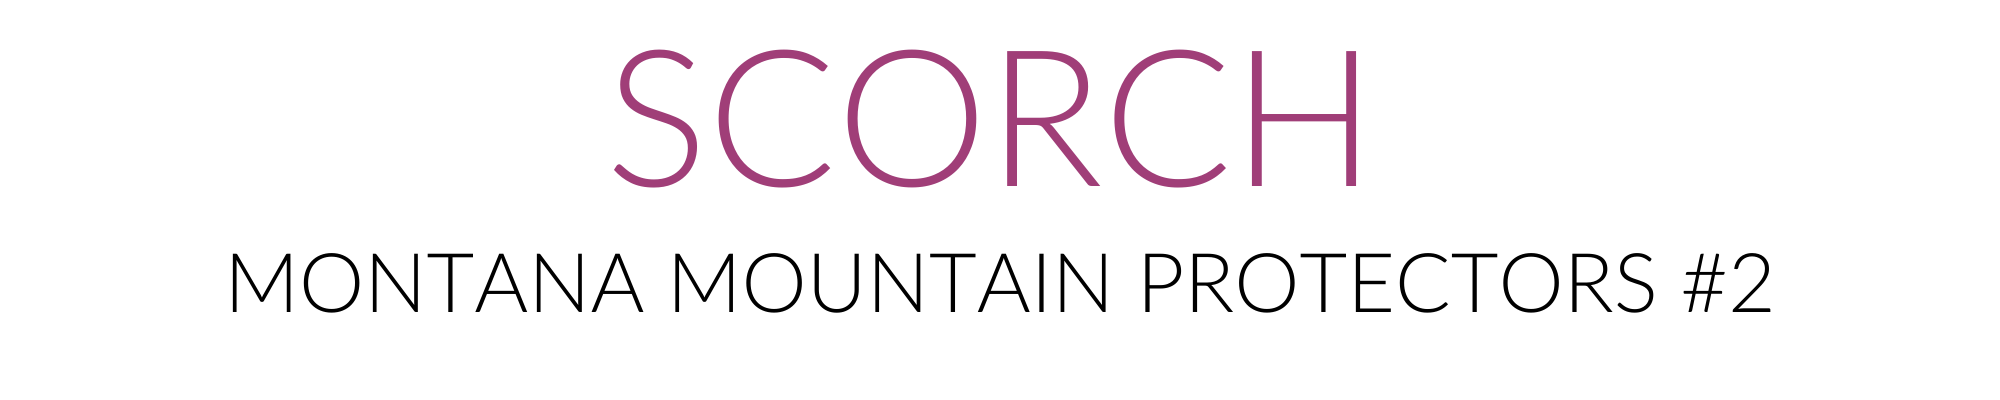 Copy of Copy of scorch-9